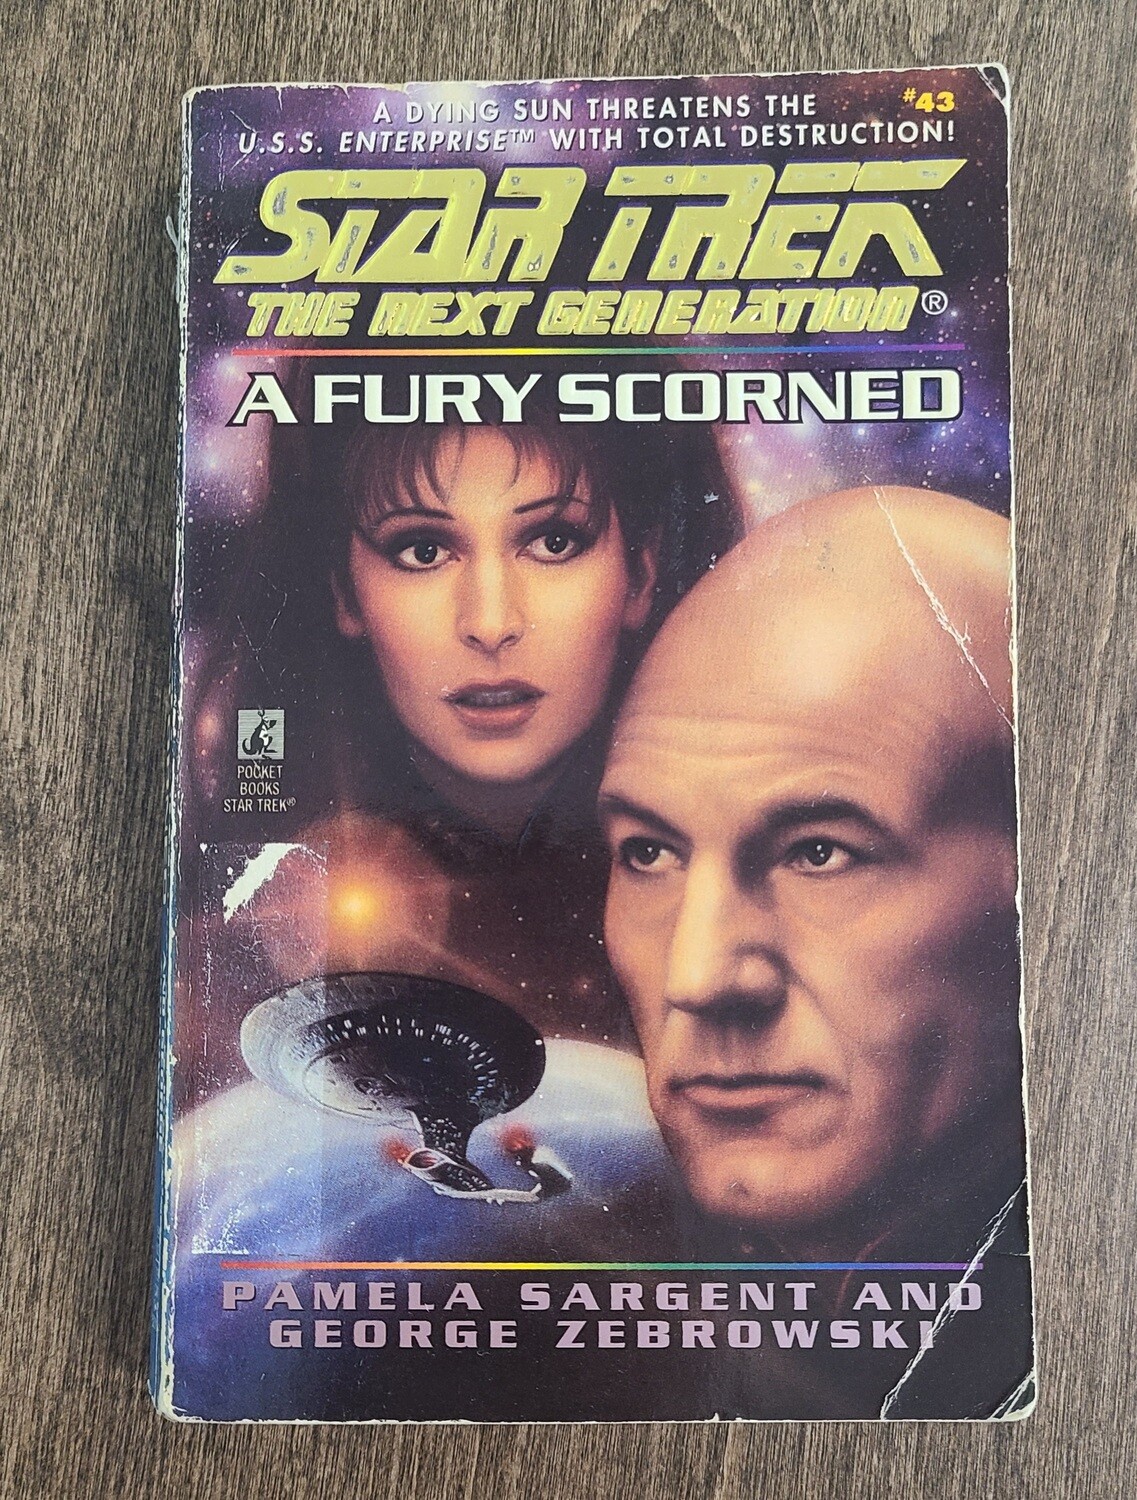 Star Trek The Next Generation: A Fury Scorned by Pamela Sargent and George Zebrowski